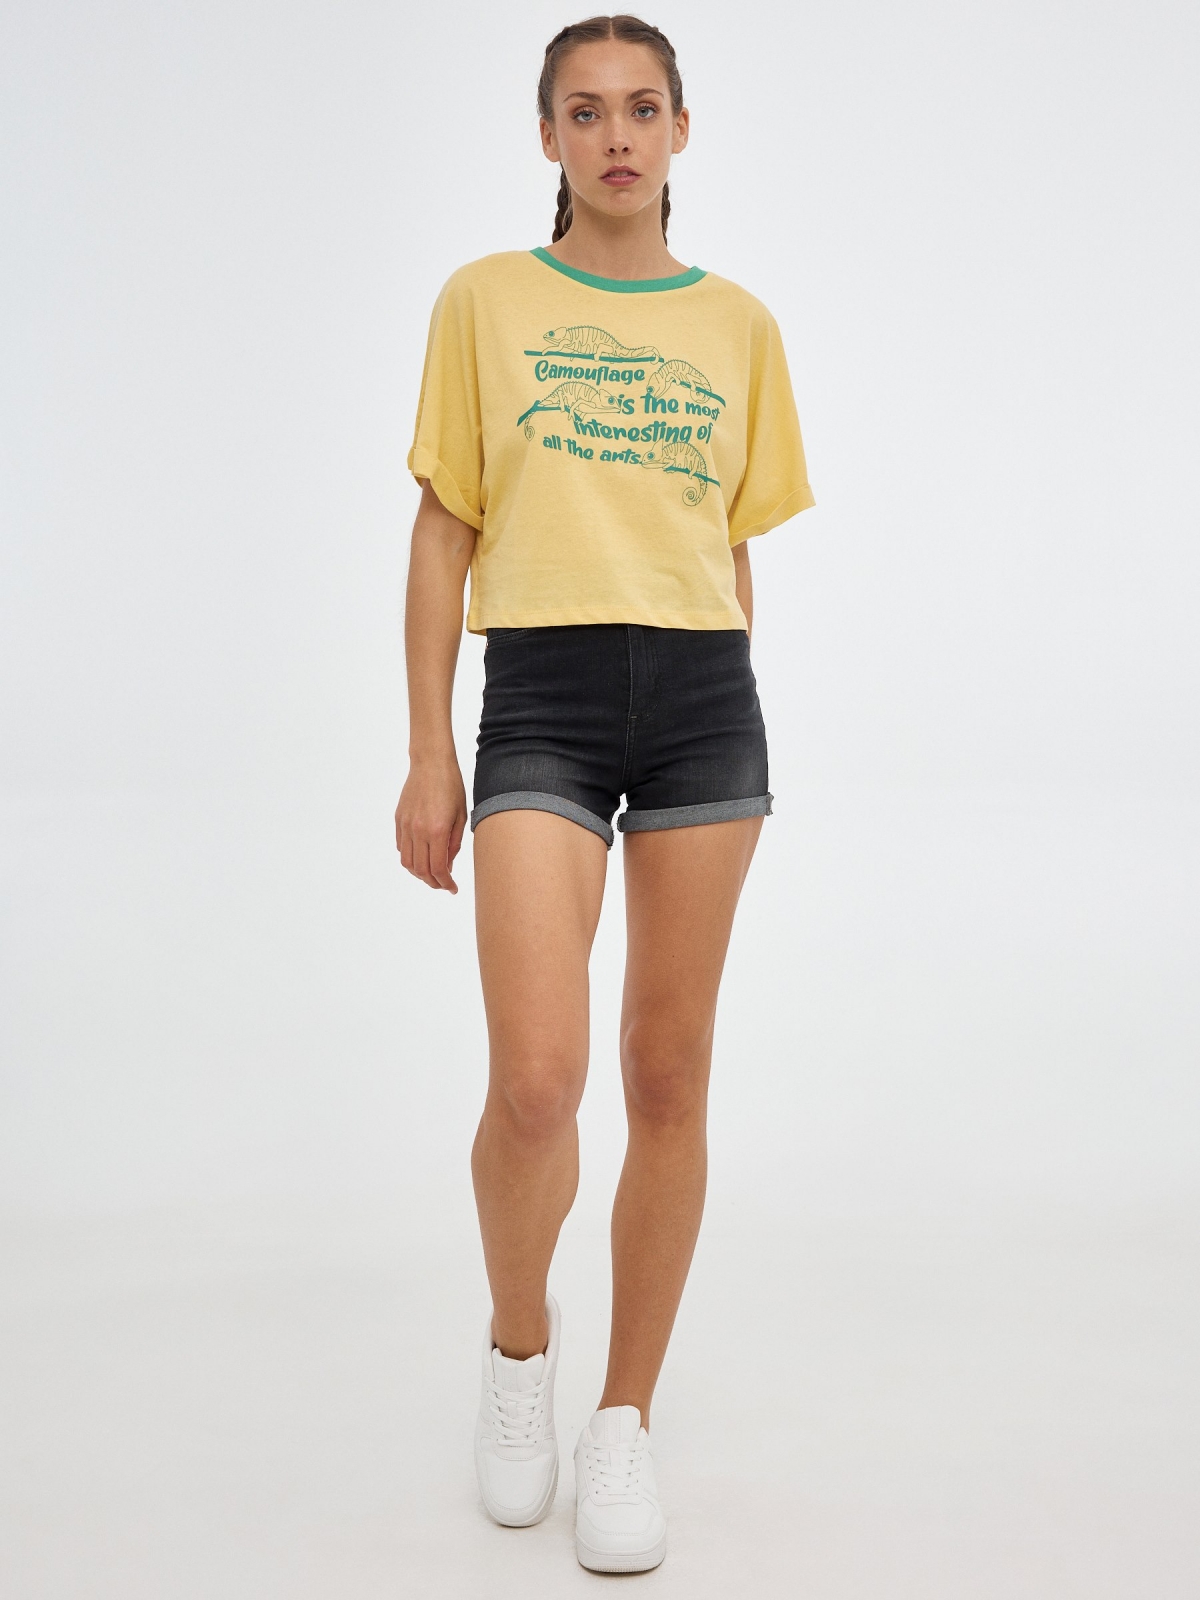 T-shirt crop camaleão amarelo pastel vista geral frontal